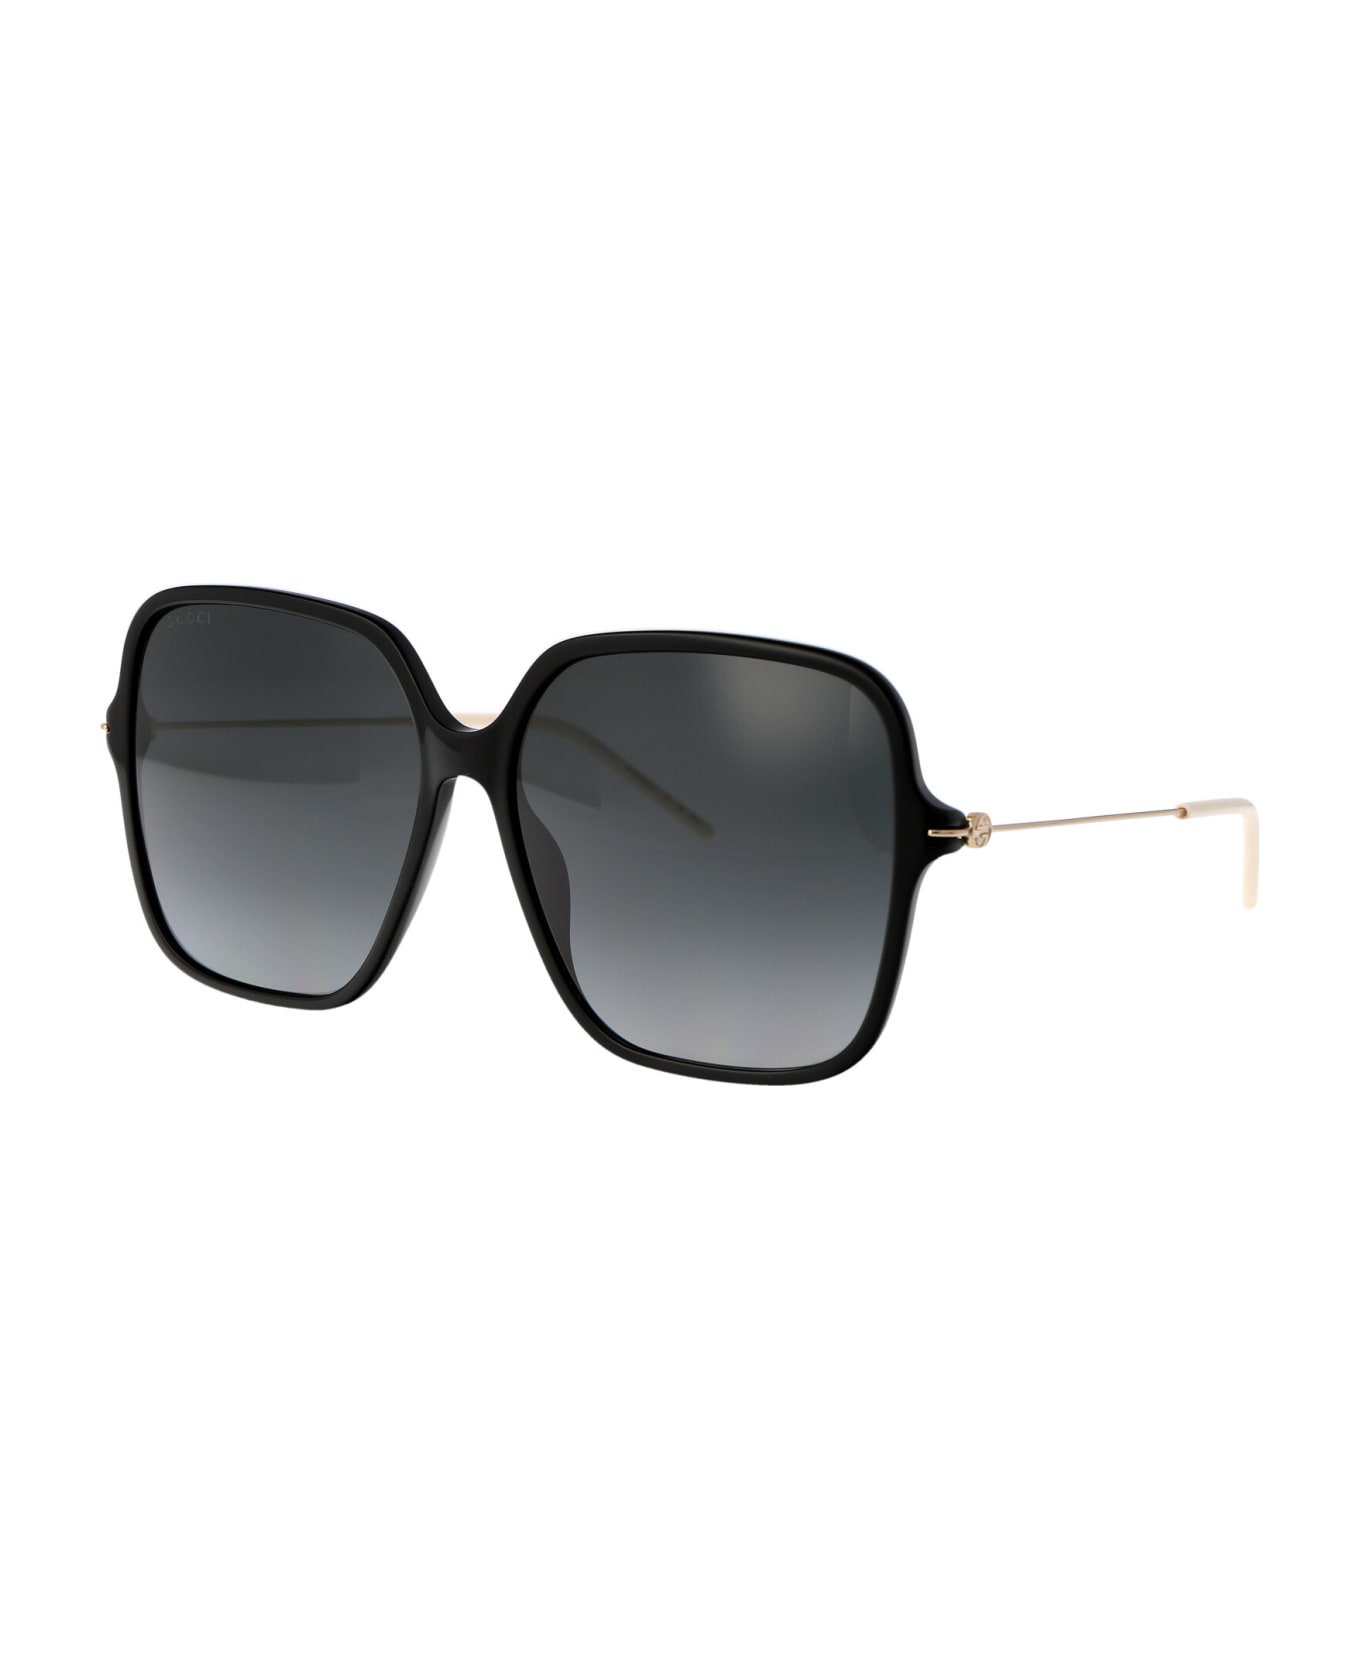 Gucci Eyewear Gg1267s Sunglasses - 001 BLACK GOLD GREY